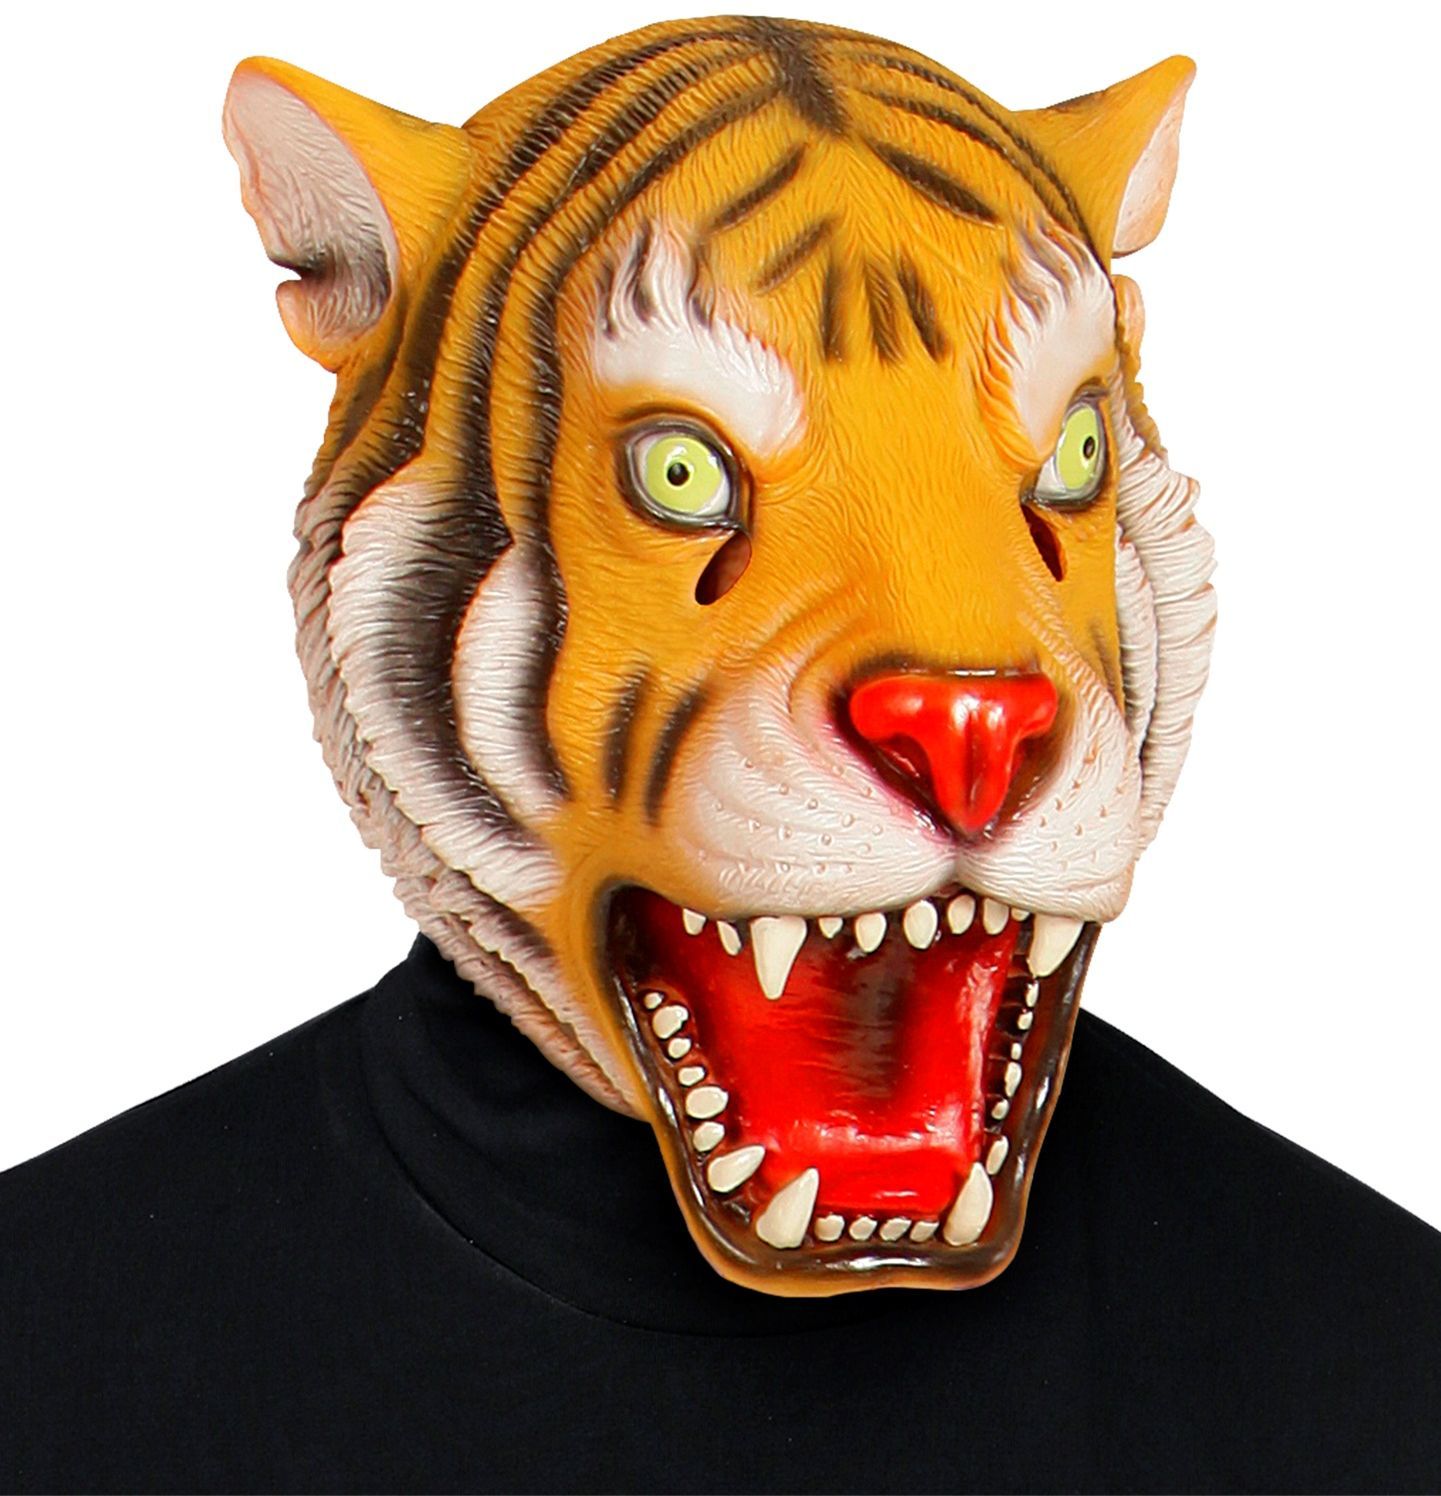 Masker tijger